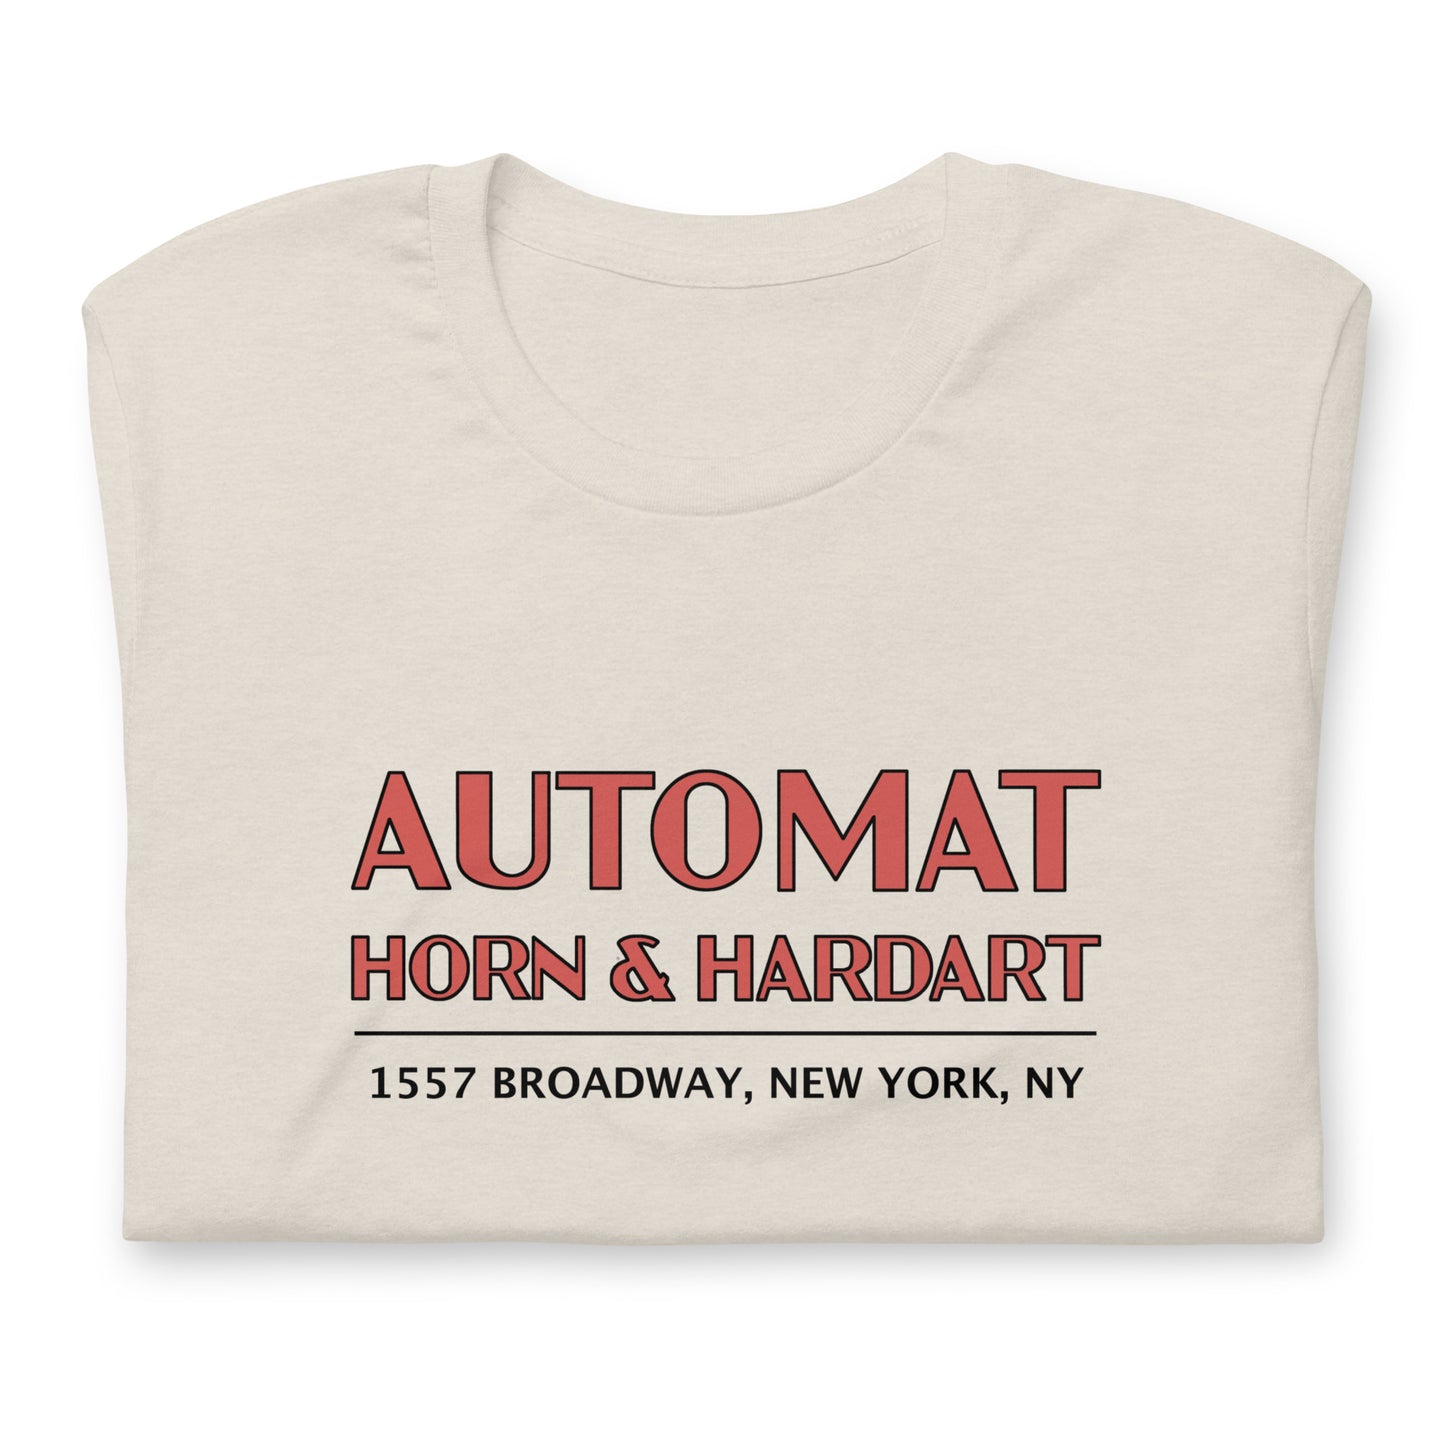 Automat Horn & Hardart t-shirt 1557 Broadway, New York, NY